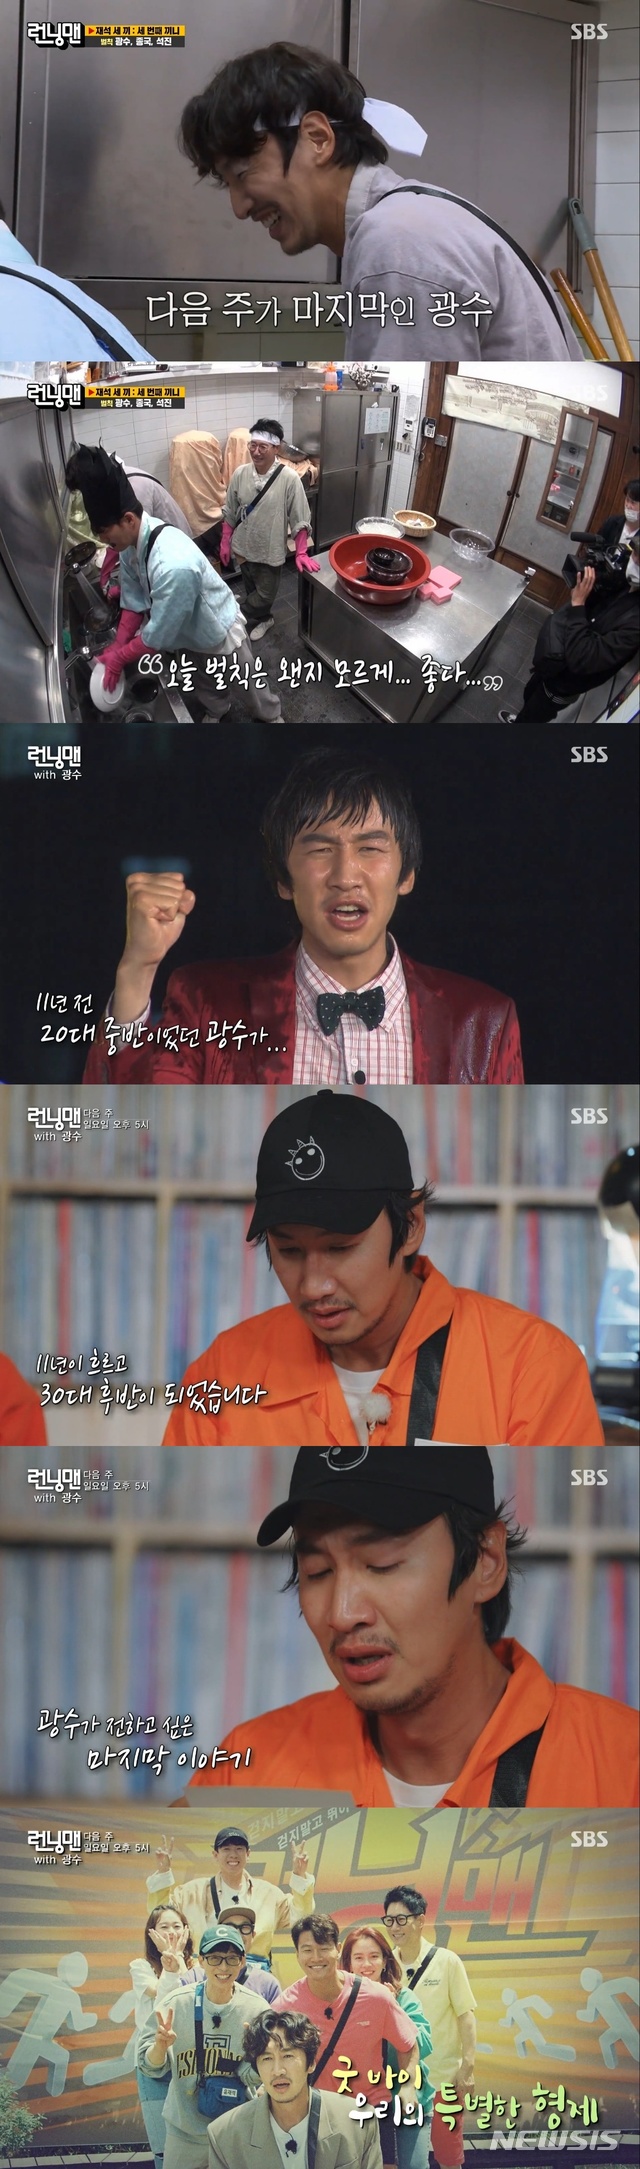 Running Man Lee Kwang Soo Last Broadcast Announcement I M Sorry Breakup Of Tears